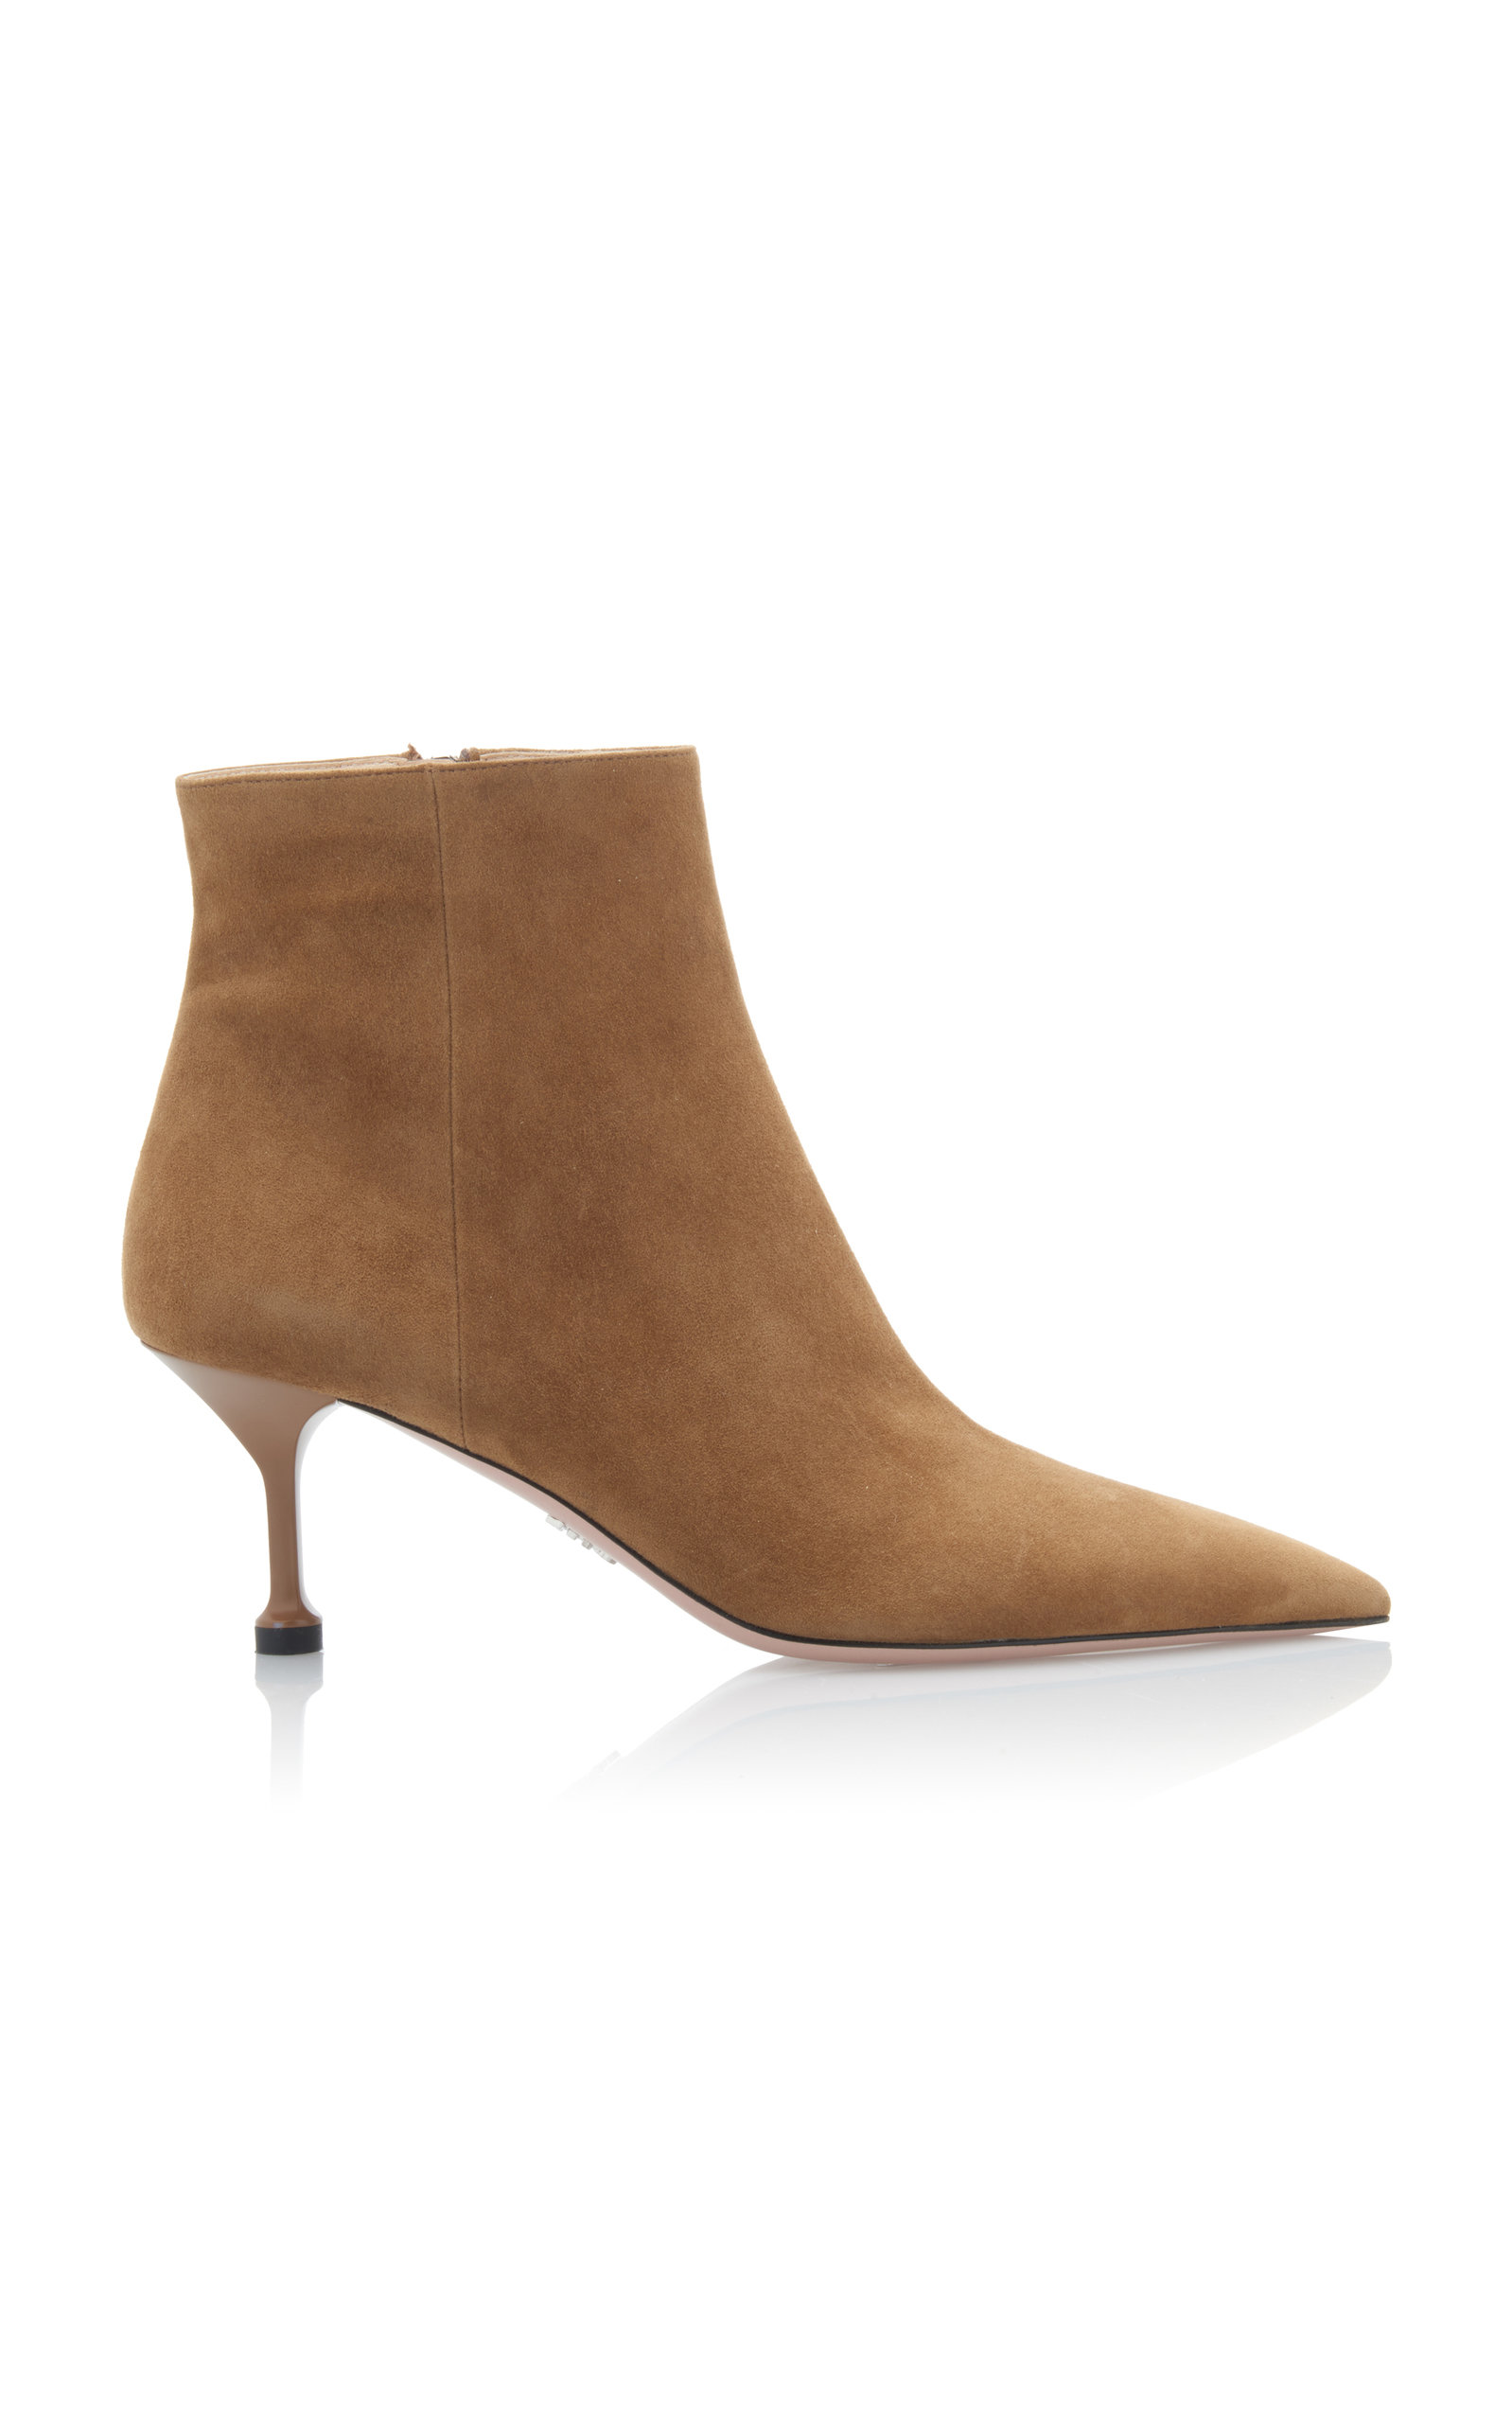 Prada - Women's Suede Ankle Boots - Brown - Moda Operandi